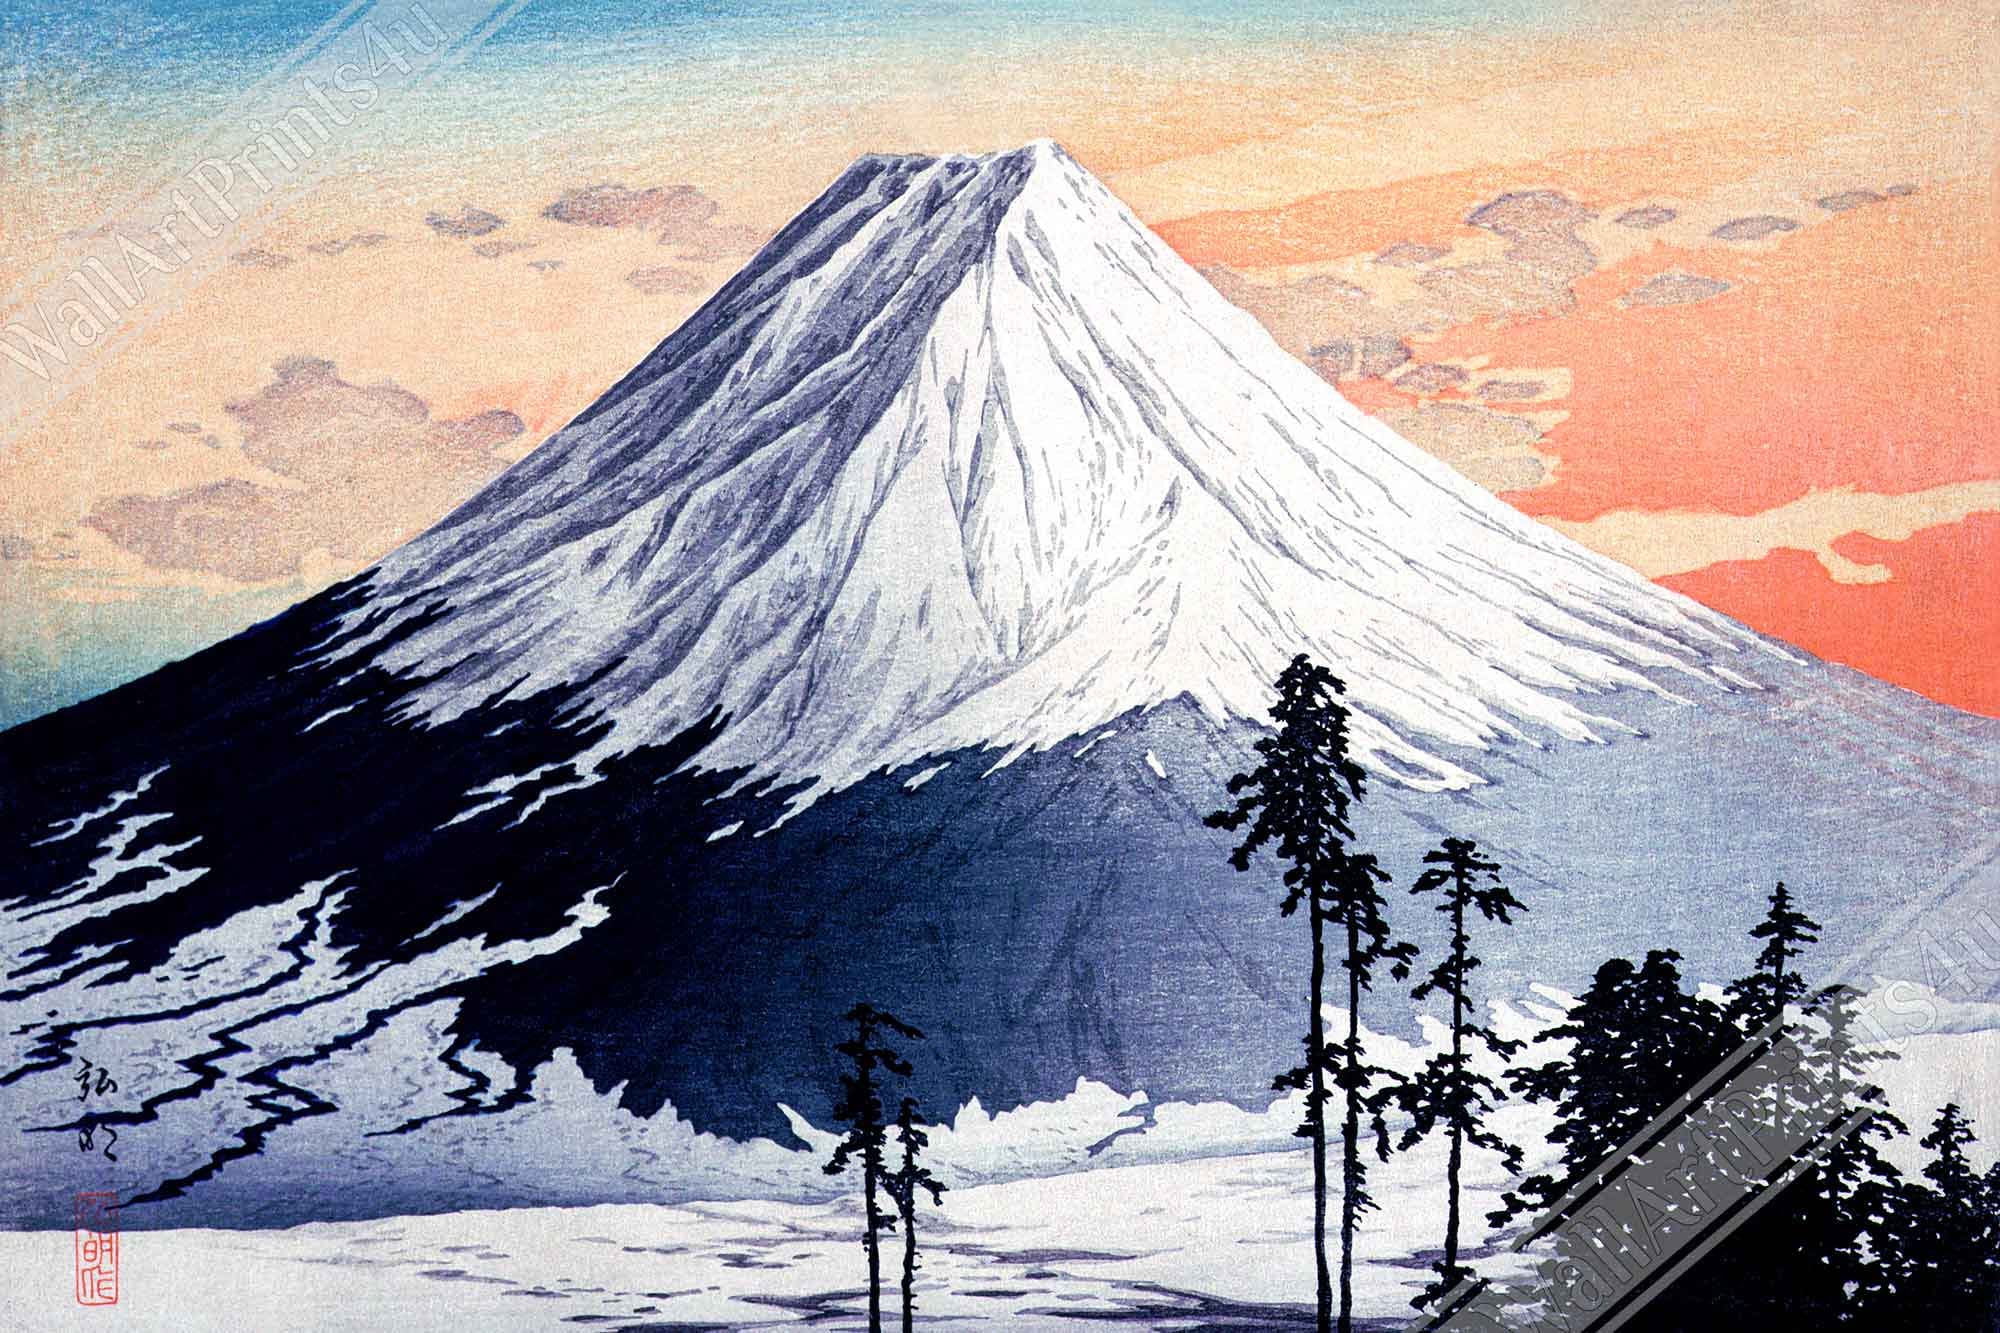 Vintage Mountain Canvas Print, Mount Fuji Canvas 1929 Hiroaki Takahashi - WallArtPrints4U